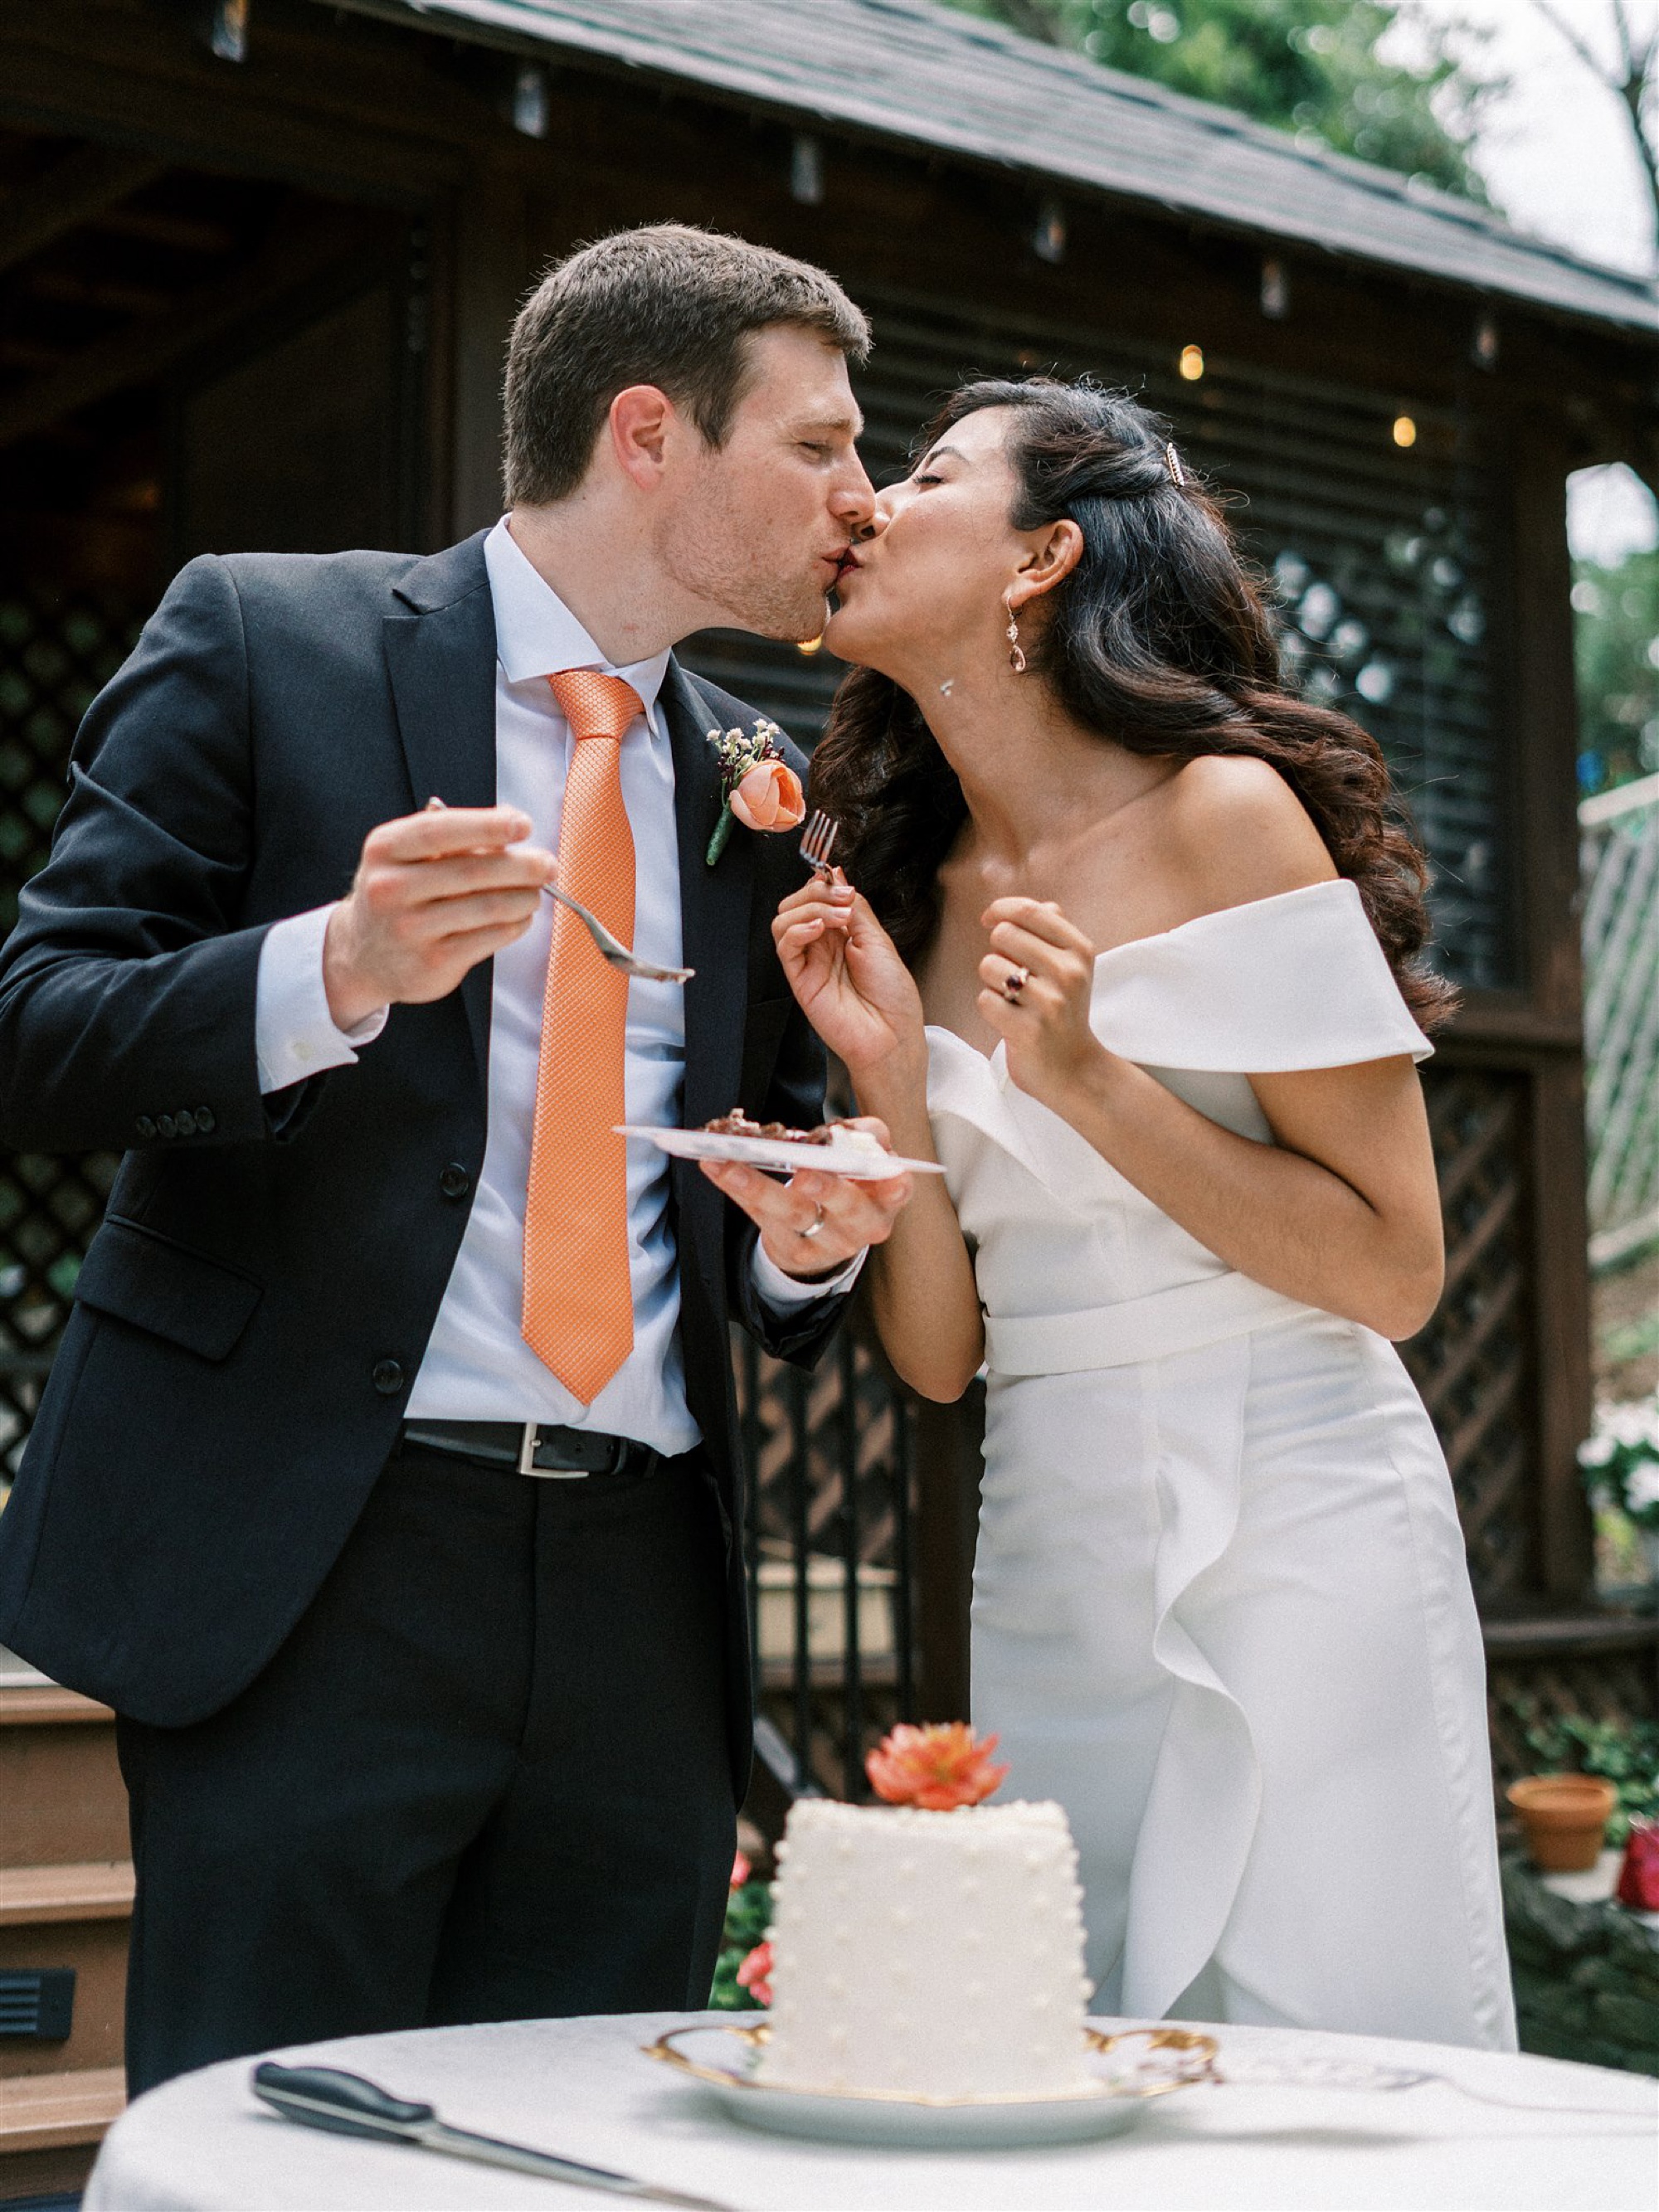 newlyweds kiss after cutting wedding cake in backyard 